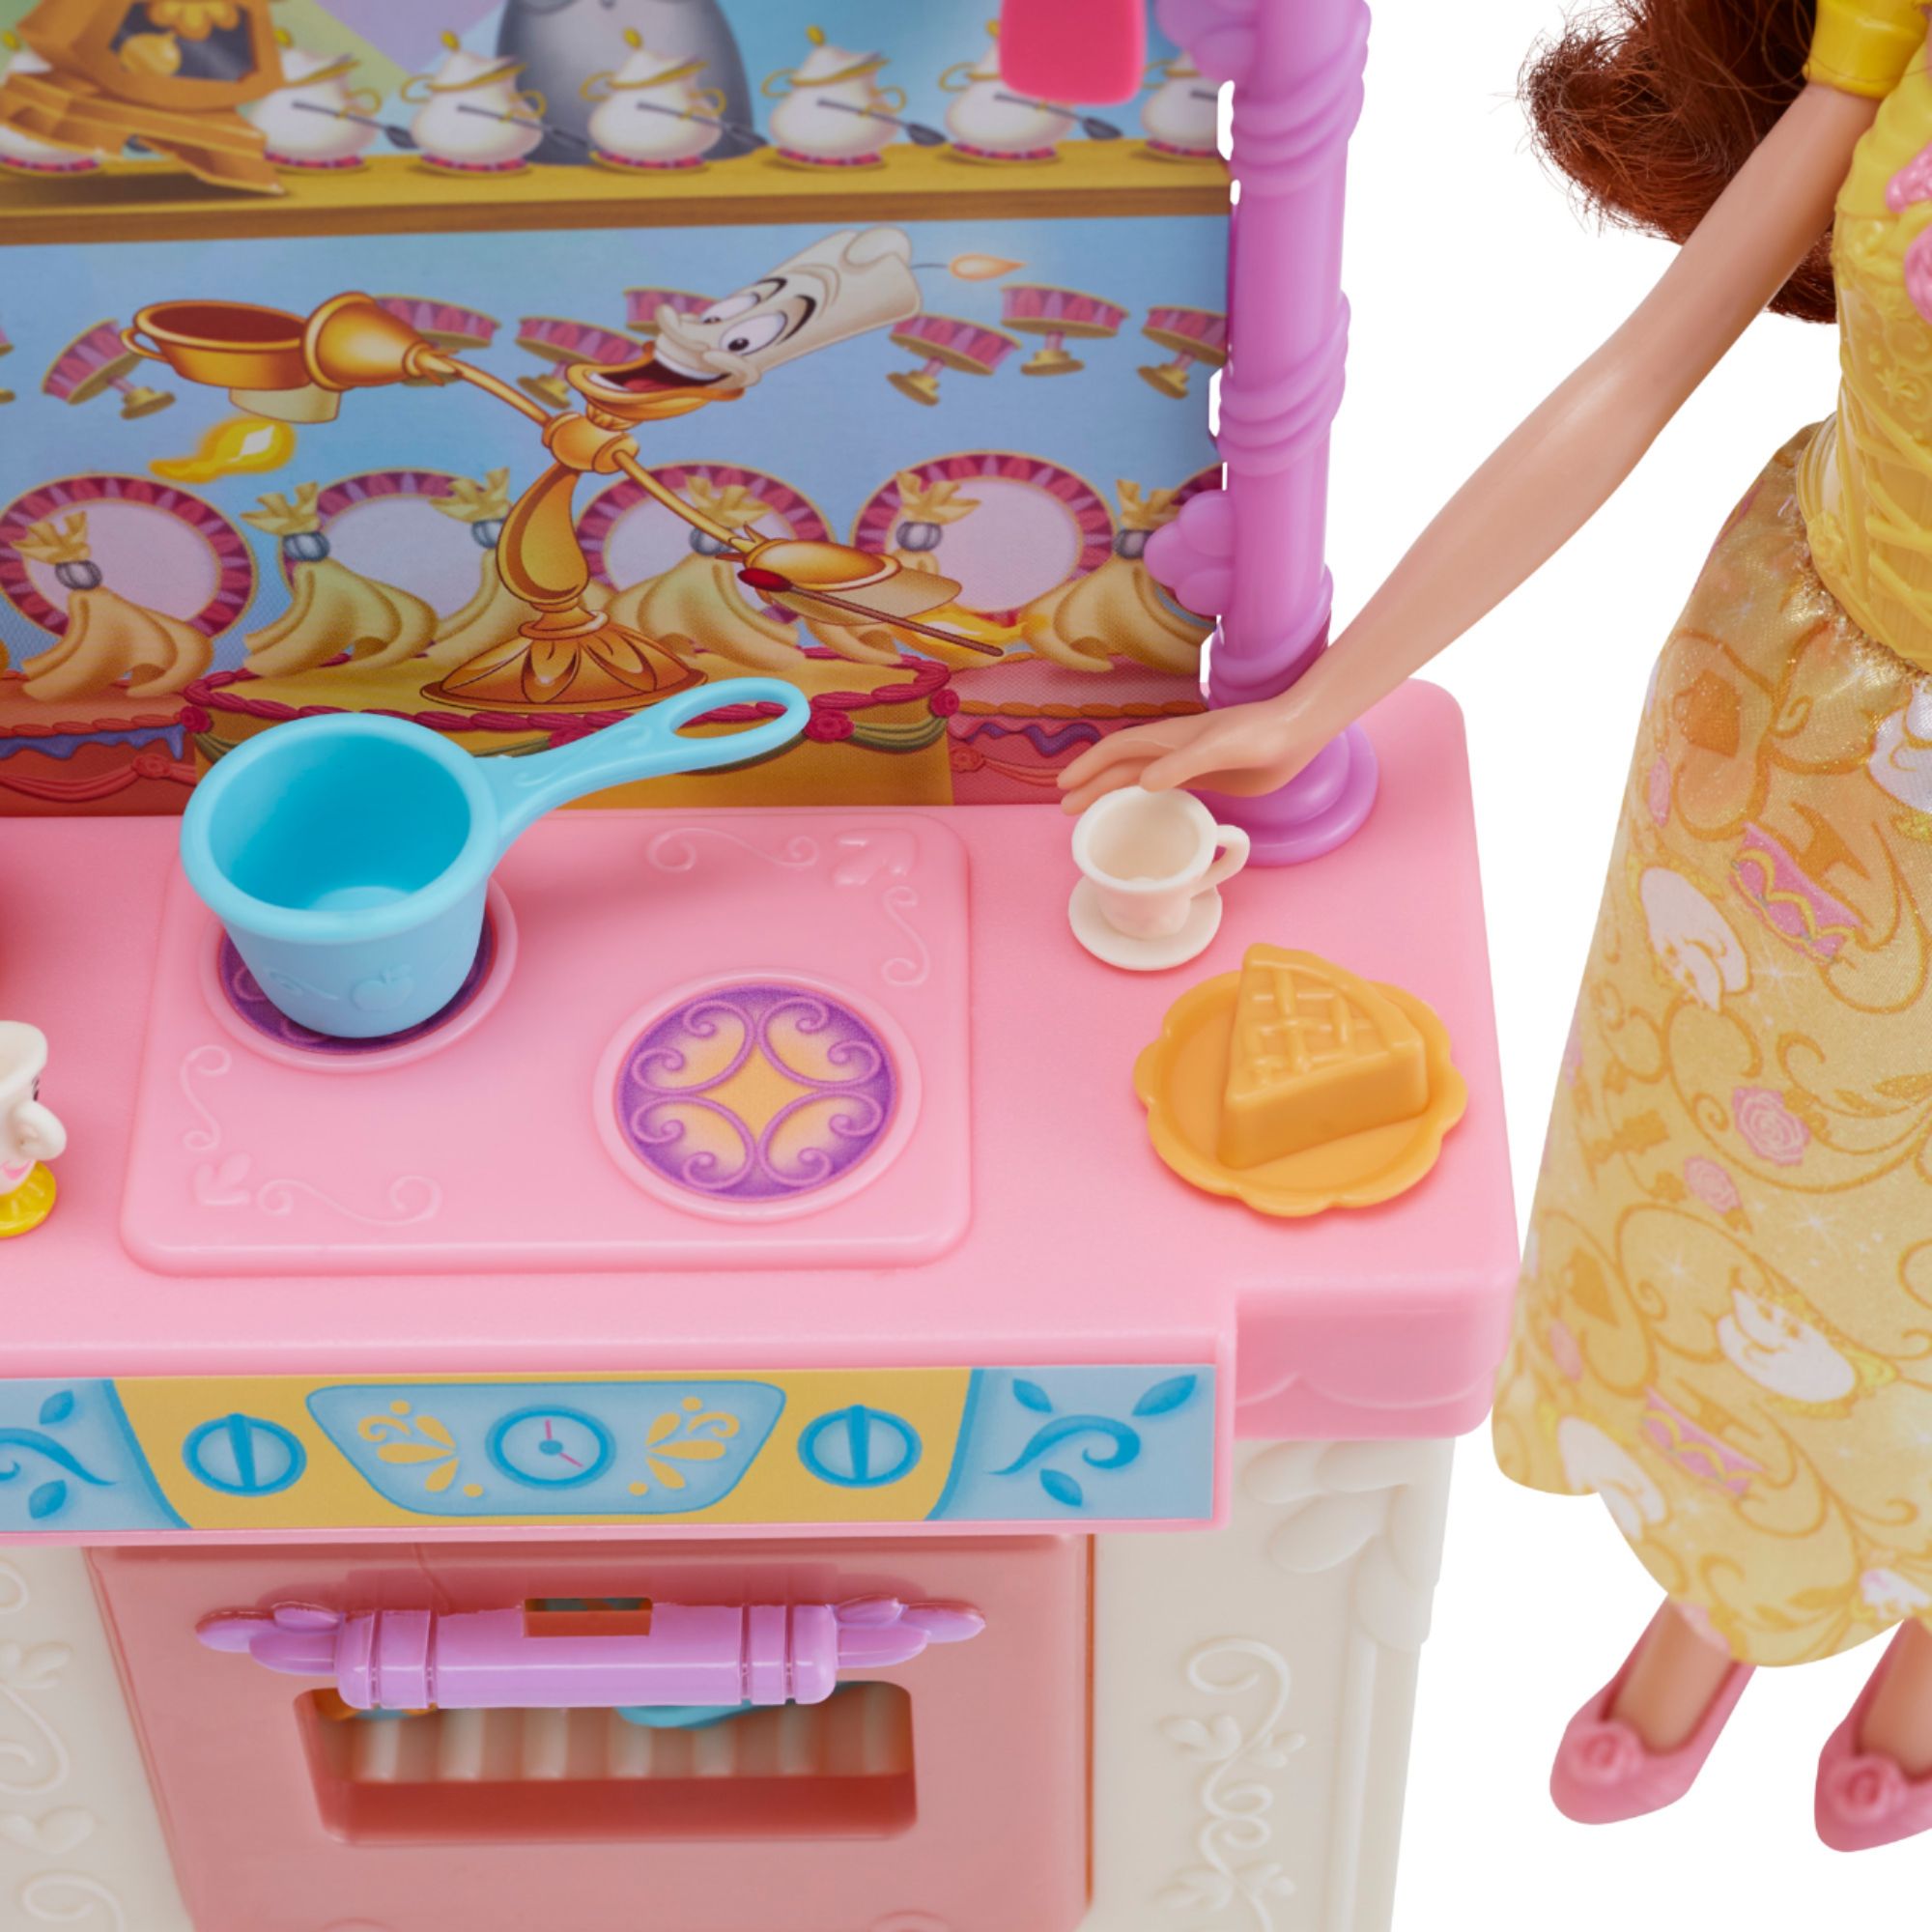 Disney Princess kitchen - toys & games - by owner - sale - craigslist